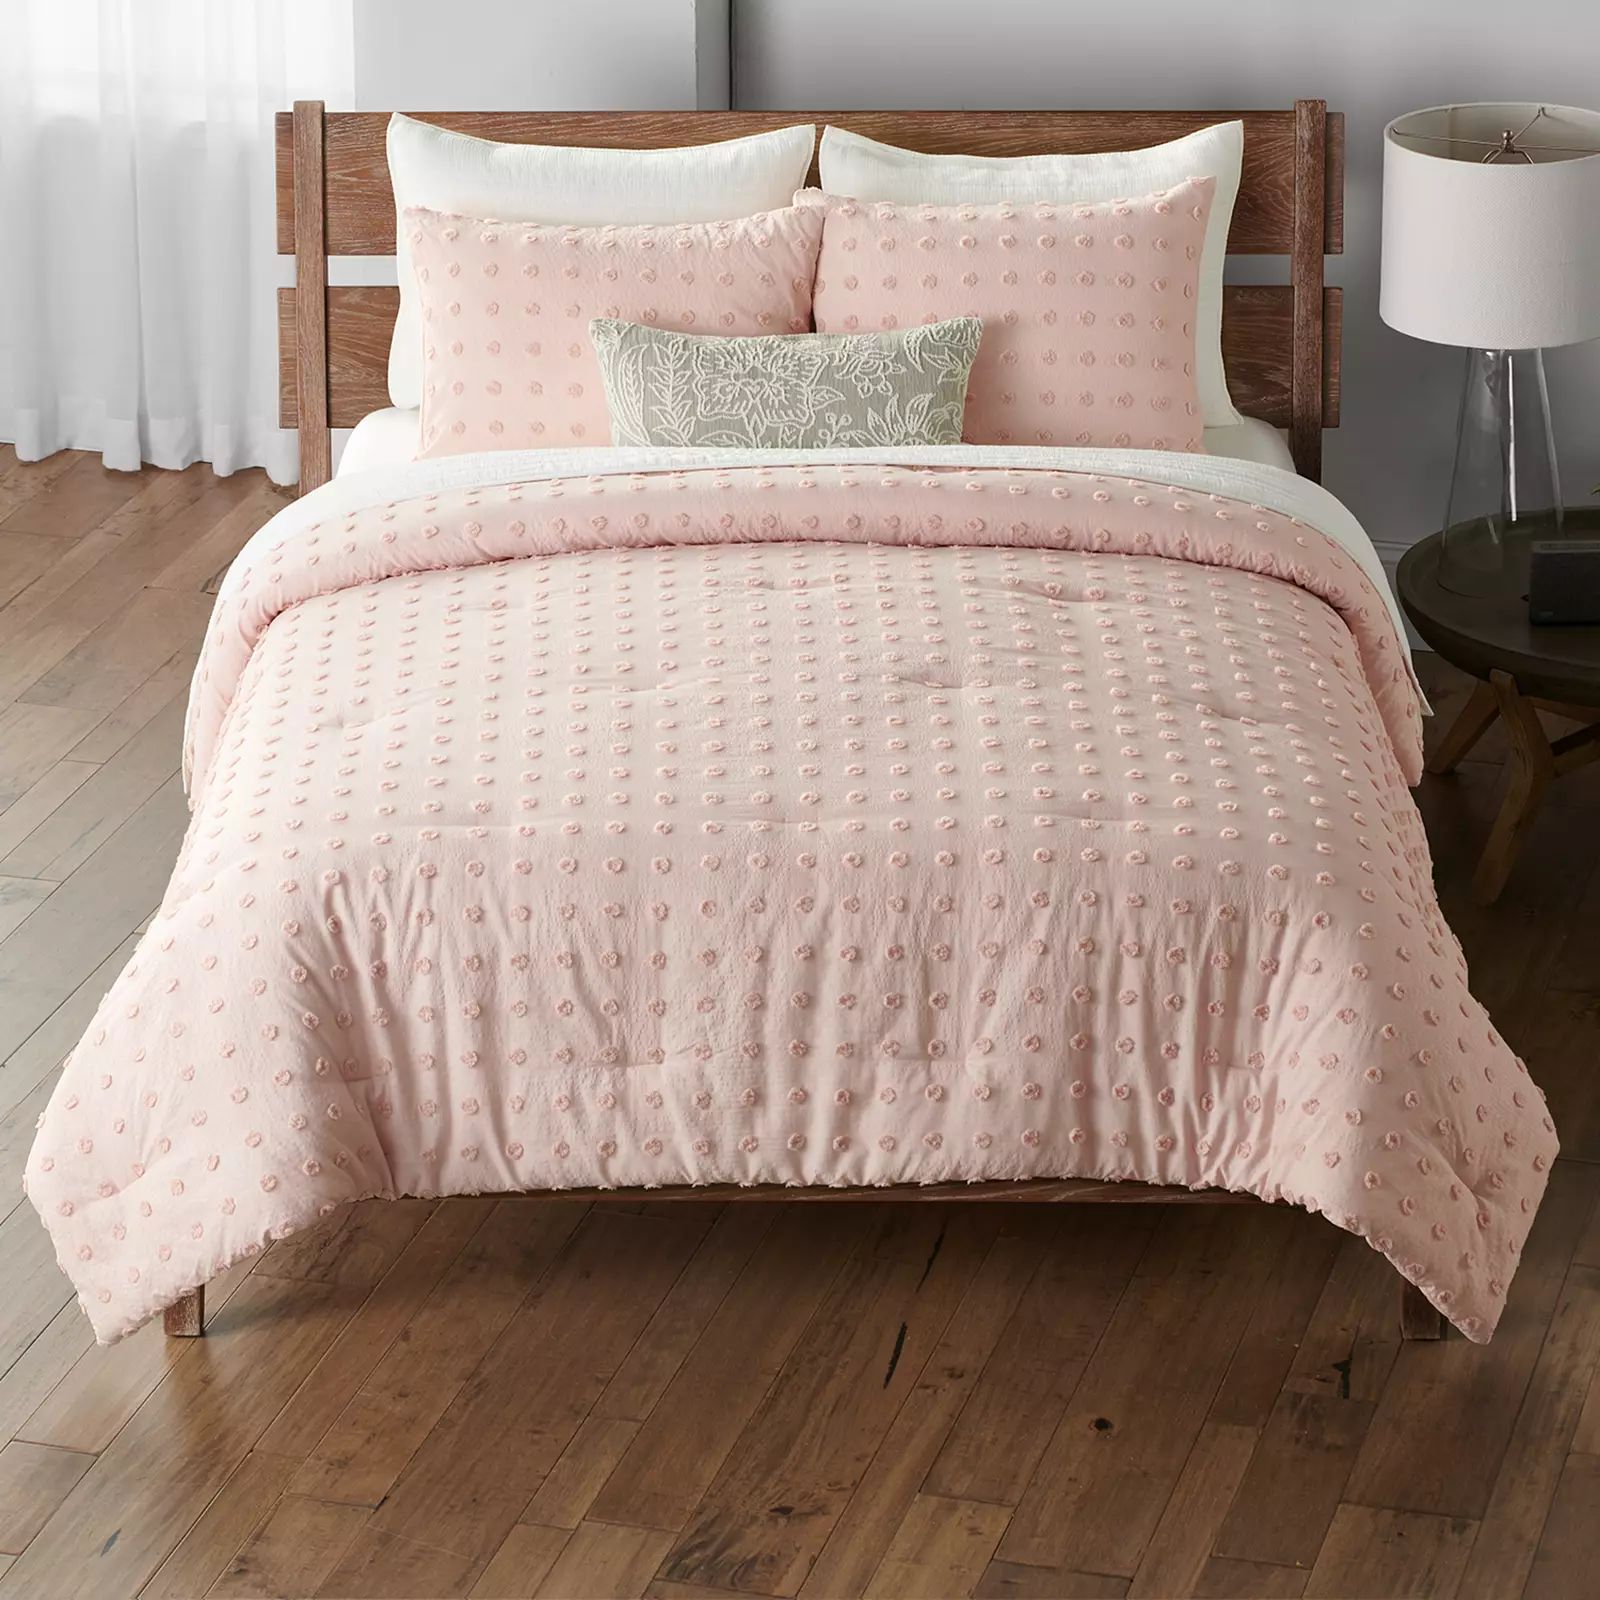 Sonoma Goods For Life Lagos Tufted Comforter Set with Shams, Pink, King | Kohl's